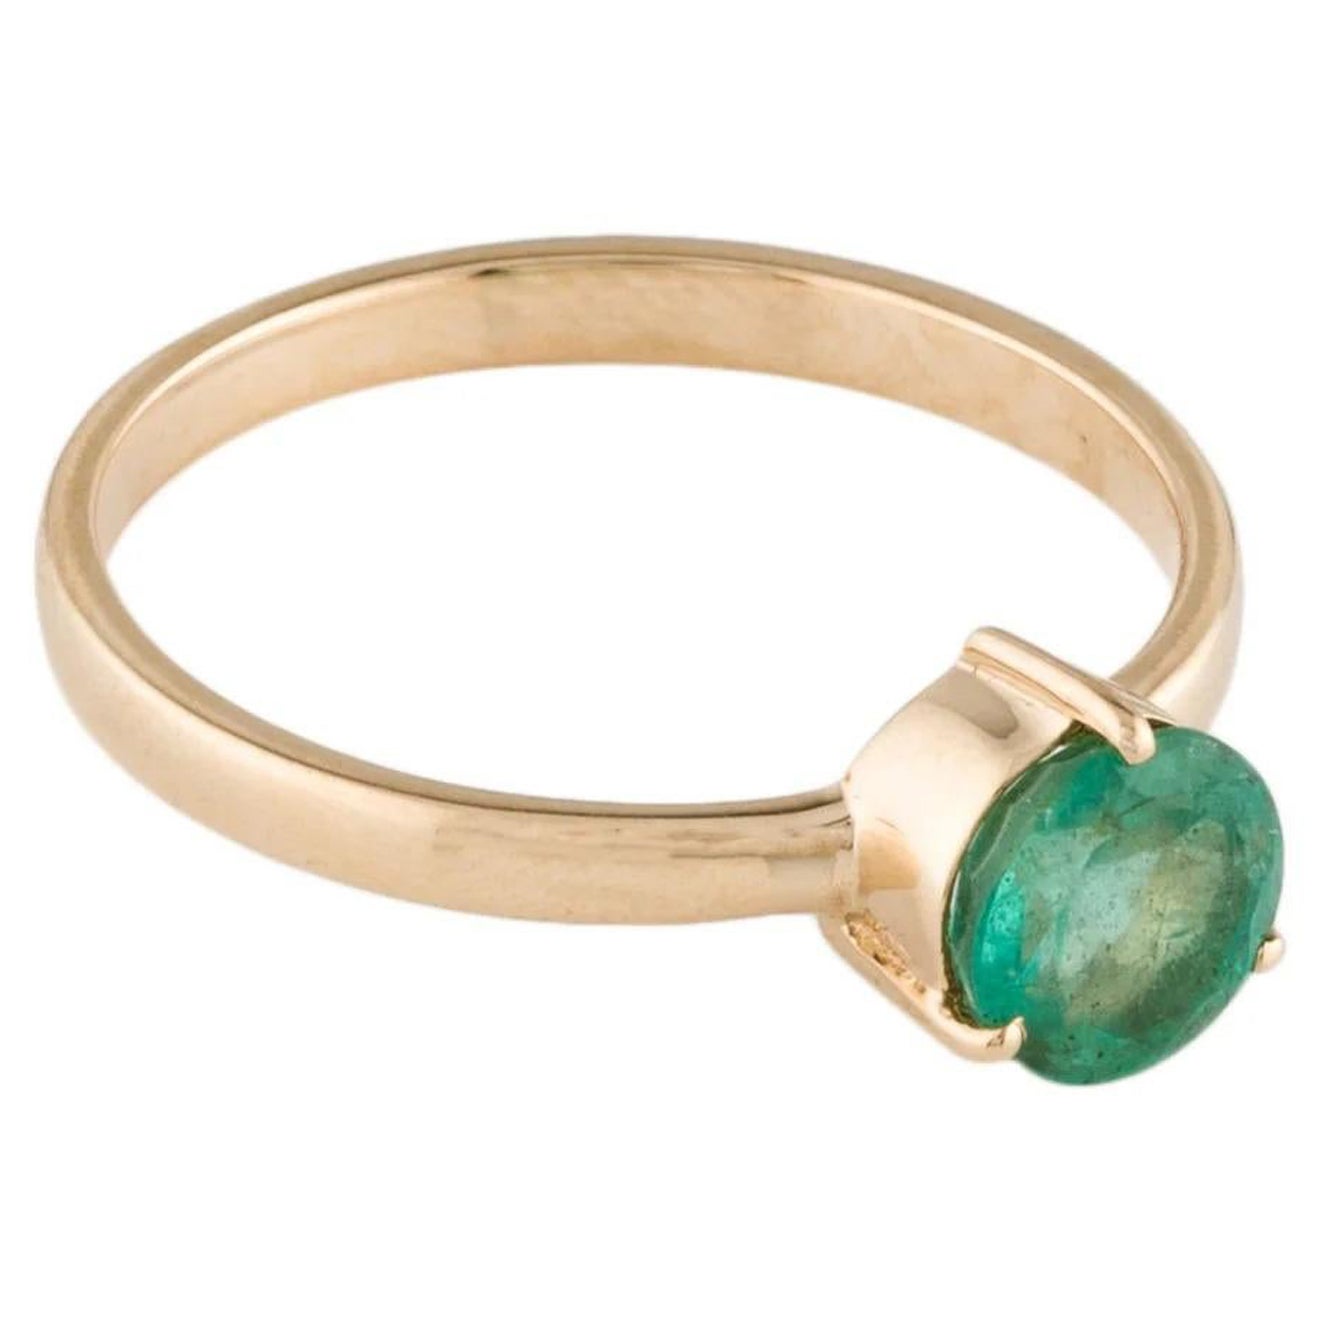 Vintage 14K Emerald Cocktail Ring, Size 6.75 - Elegant Green Gemstone Jewelry For Sale